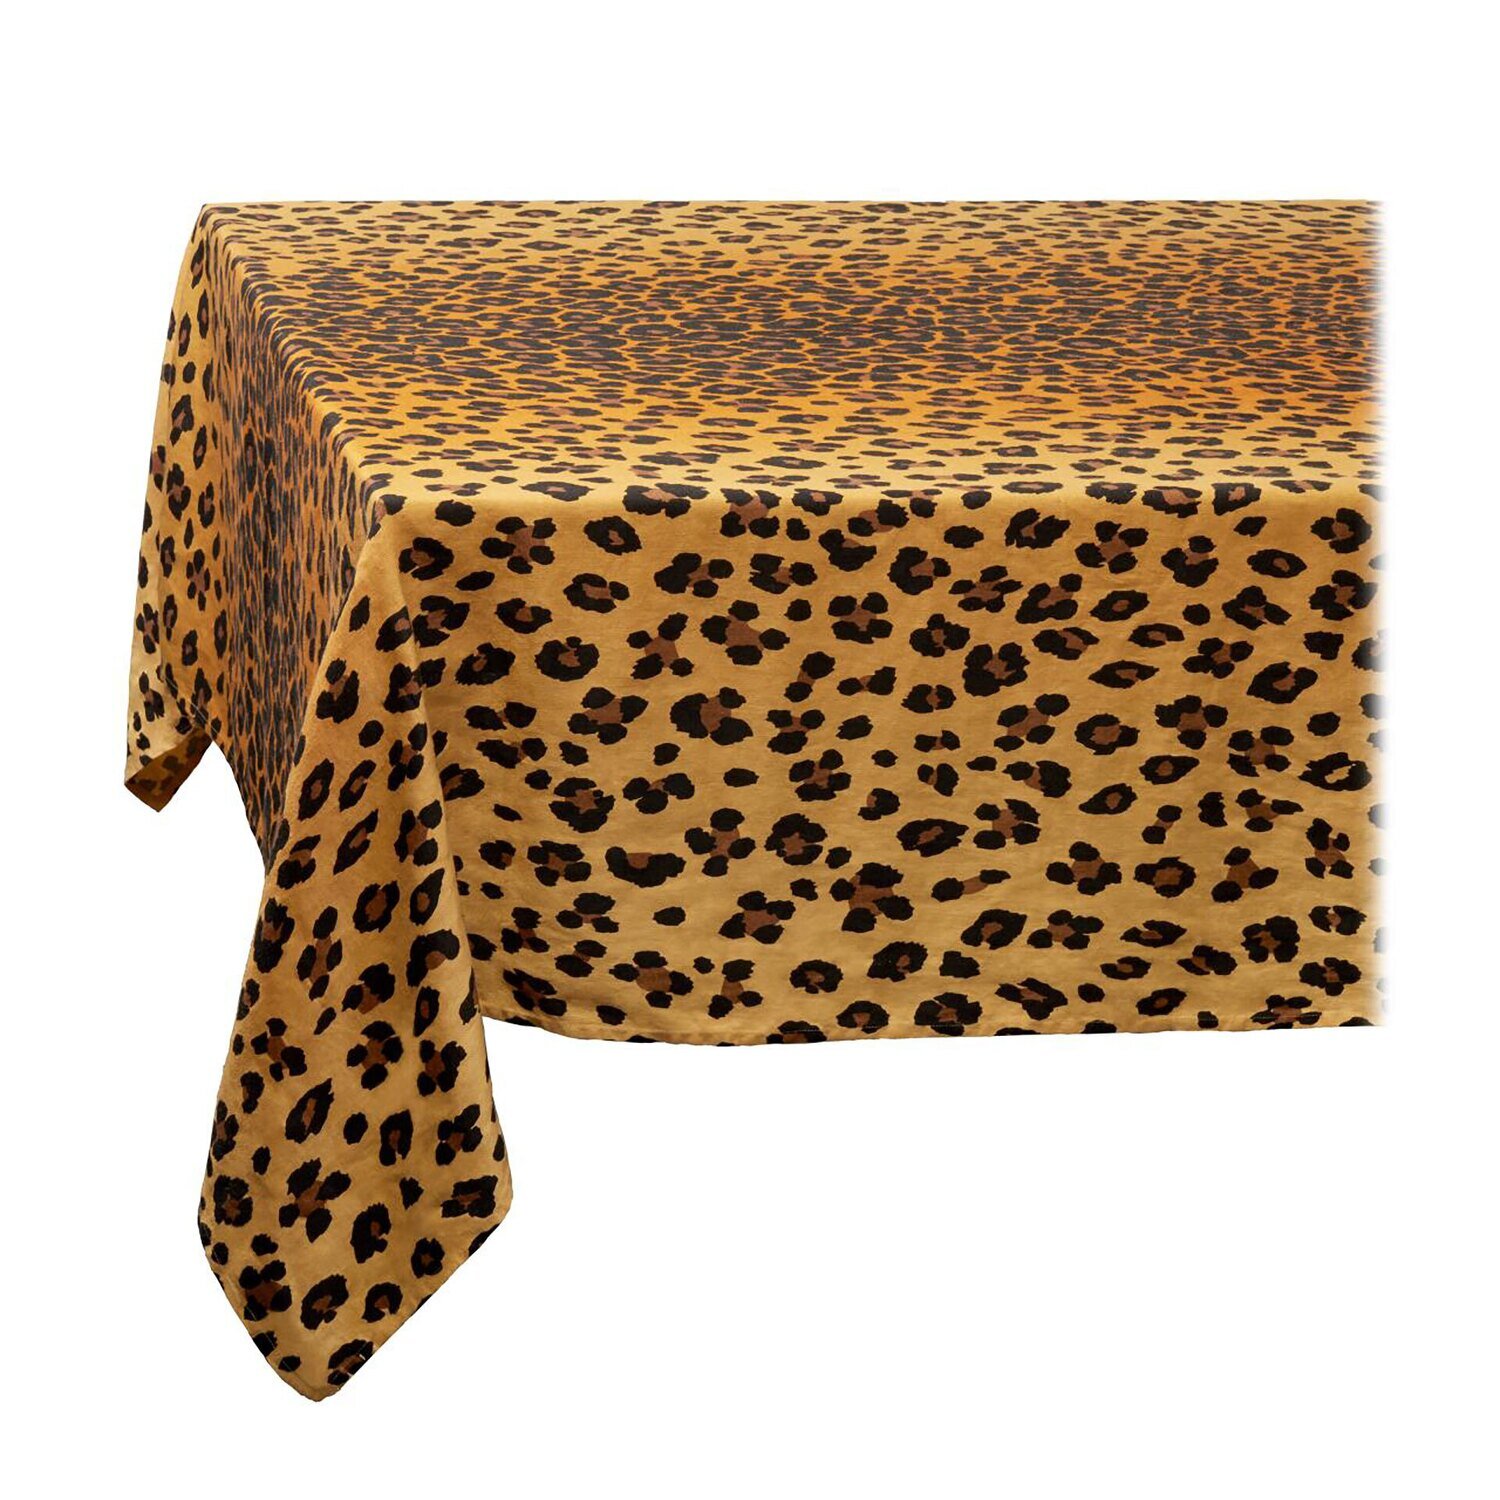 L'Objet Linen Sateen Leopard Tablecloth Medium Natural LN5520